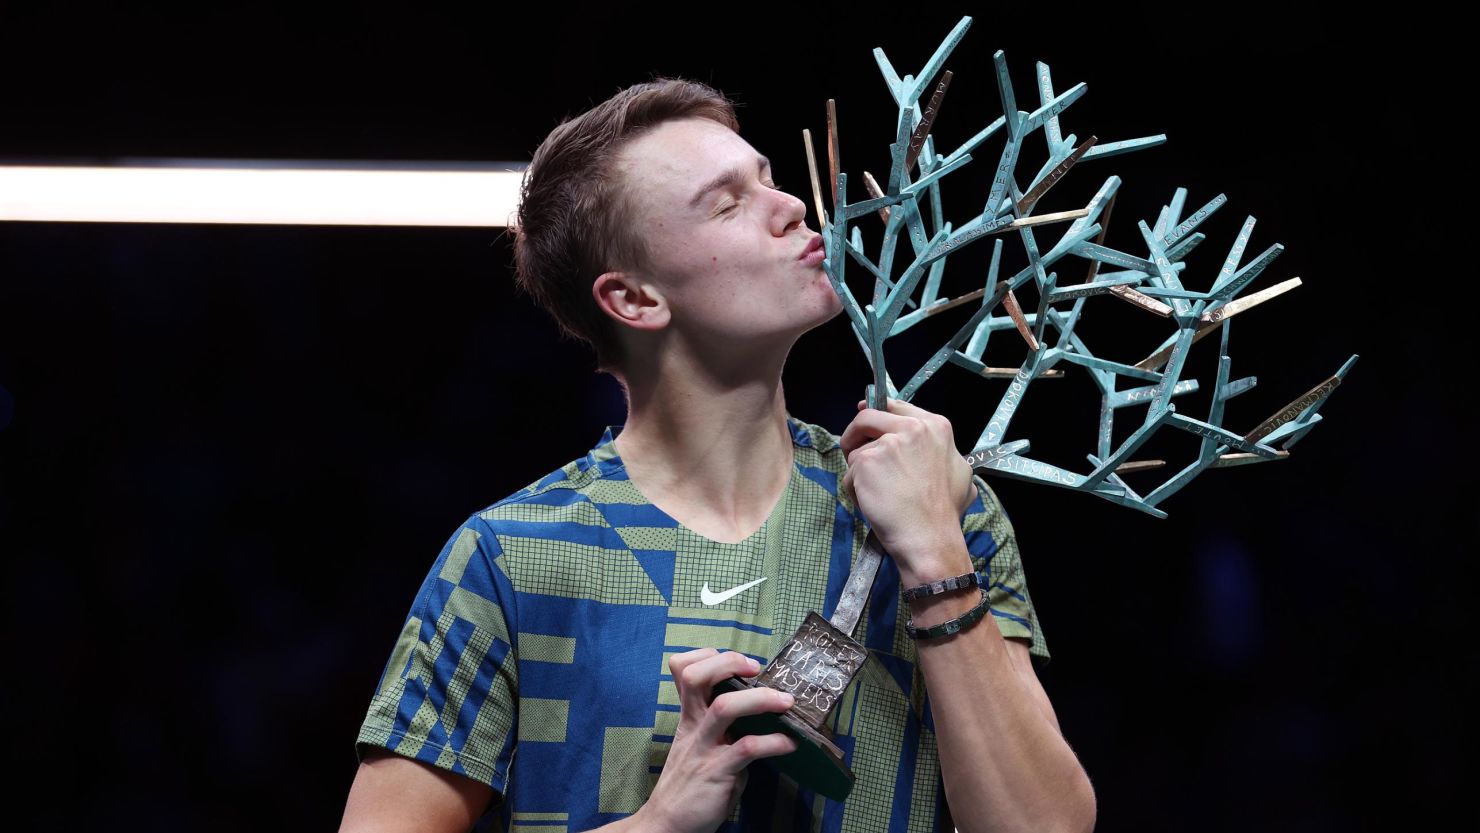 Holger Rune celebrates winning the Paris Masters title against Novak Djokovic. 